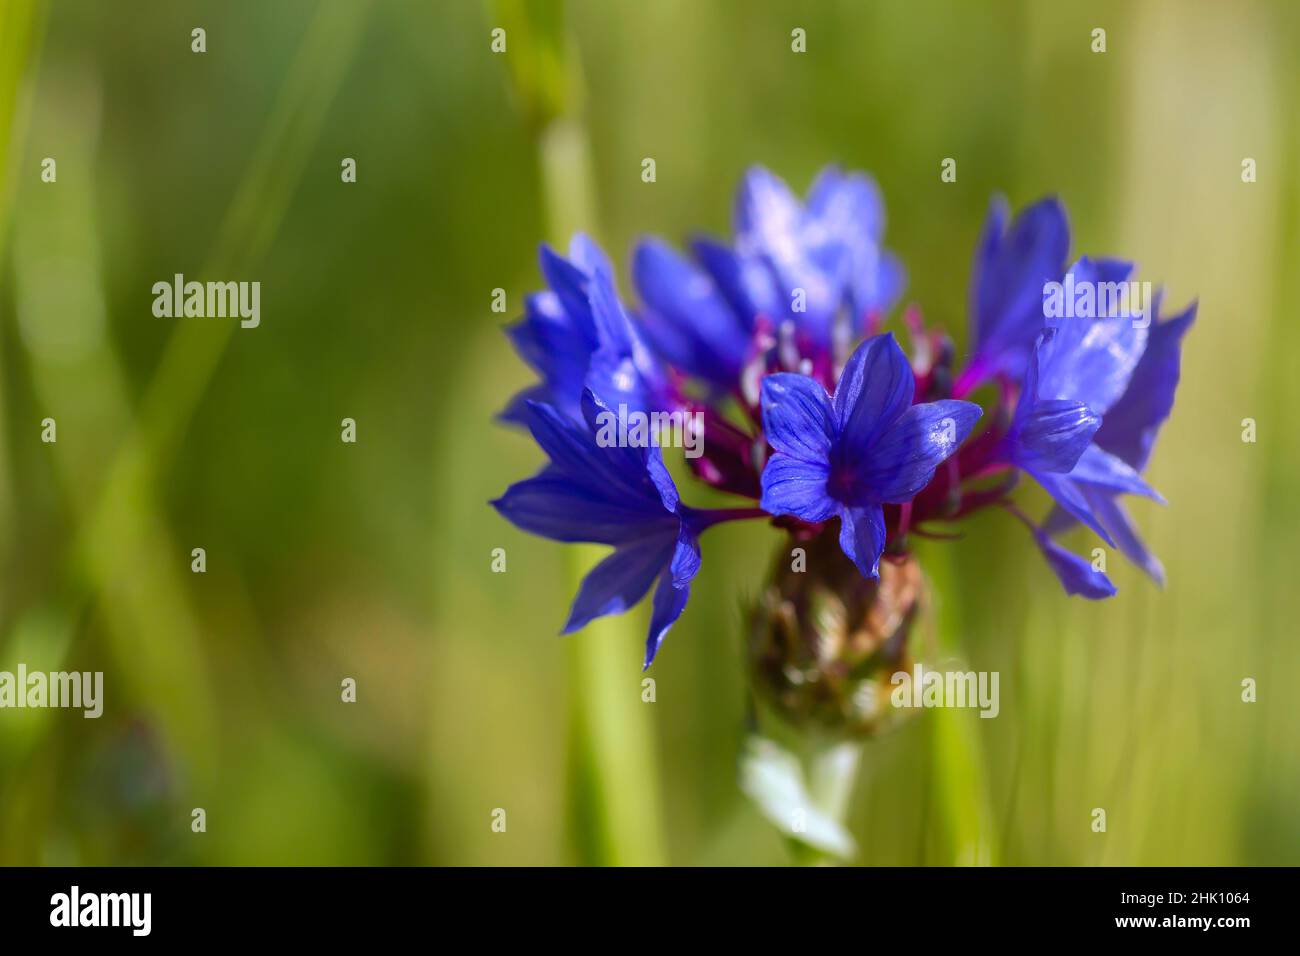 Bachelor's button (Centaurea cyanus) blue purplish flower blooming Stock Photo